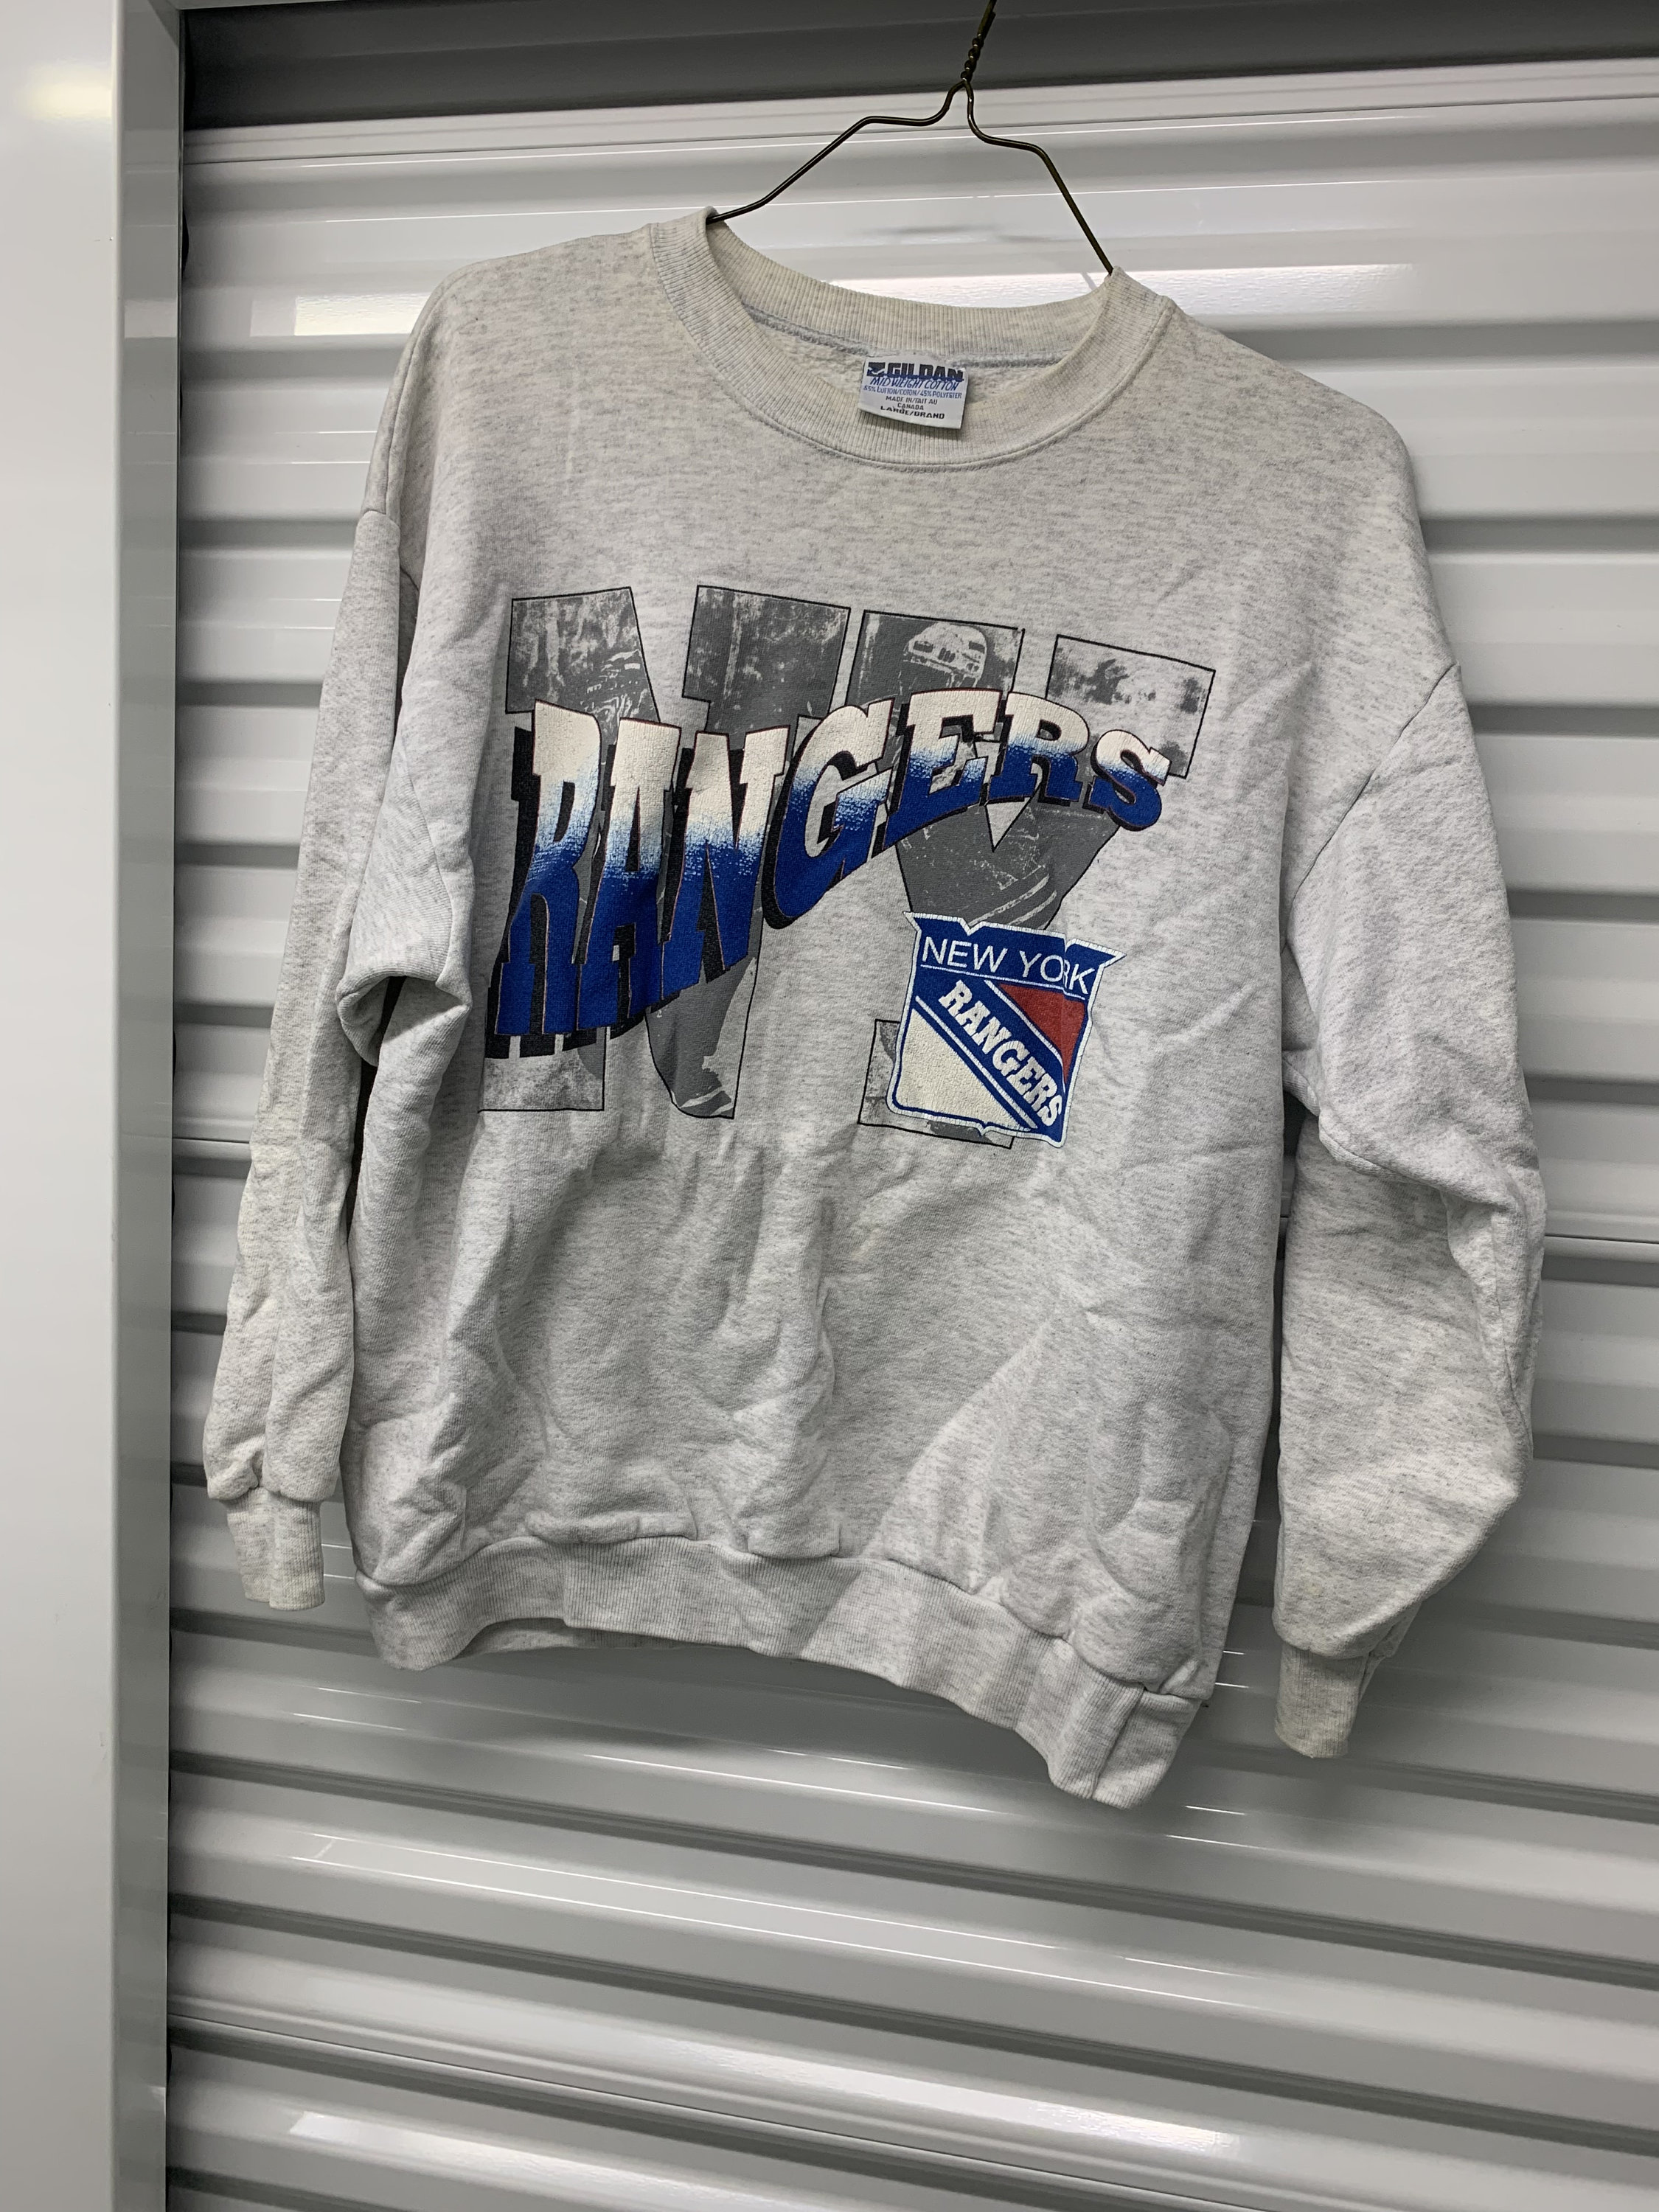 NY Rangers No Quit In New York Hockey Finals Shirt For Men Women